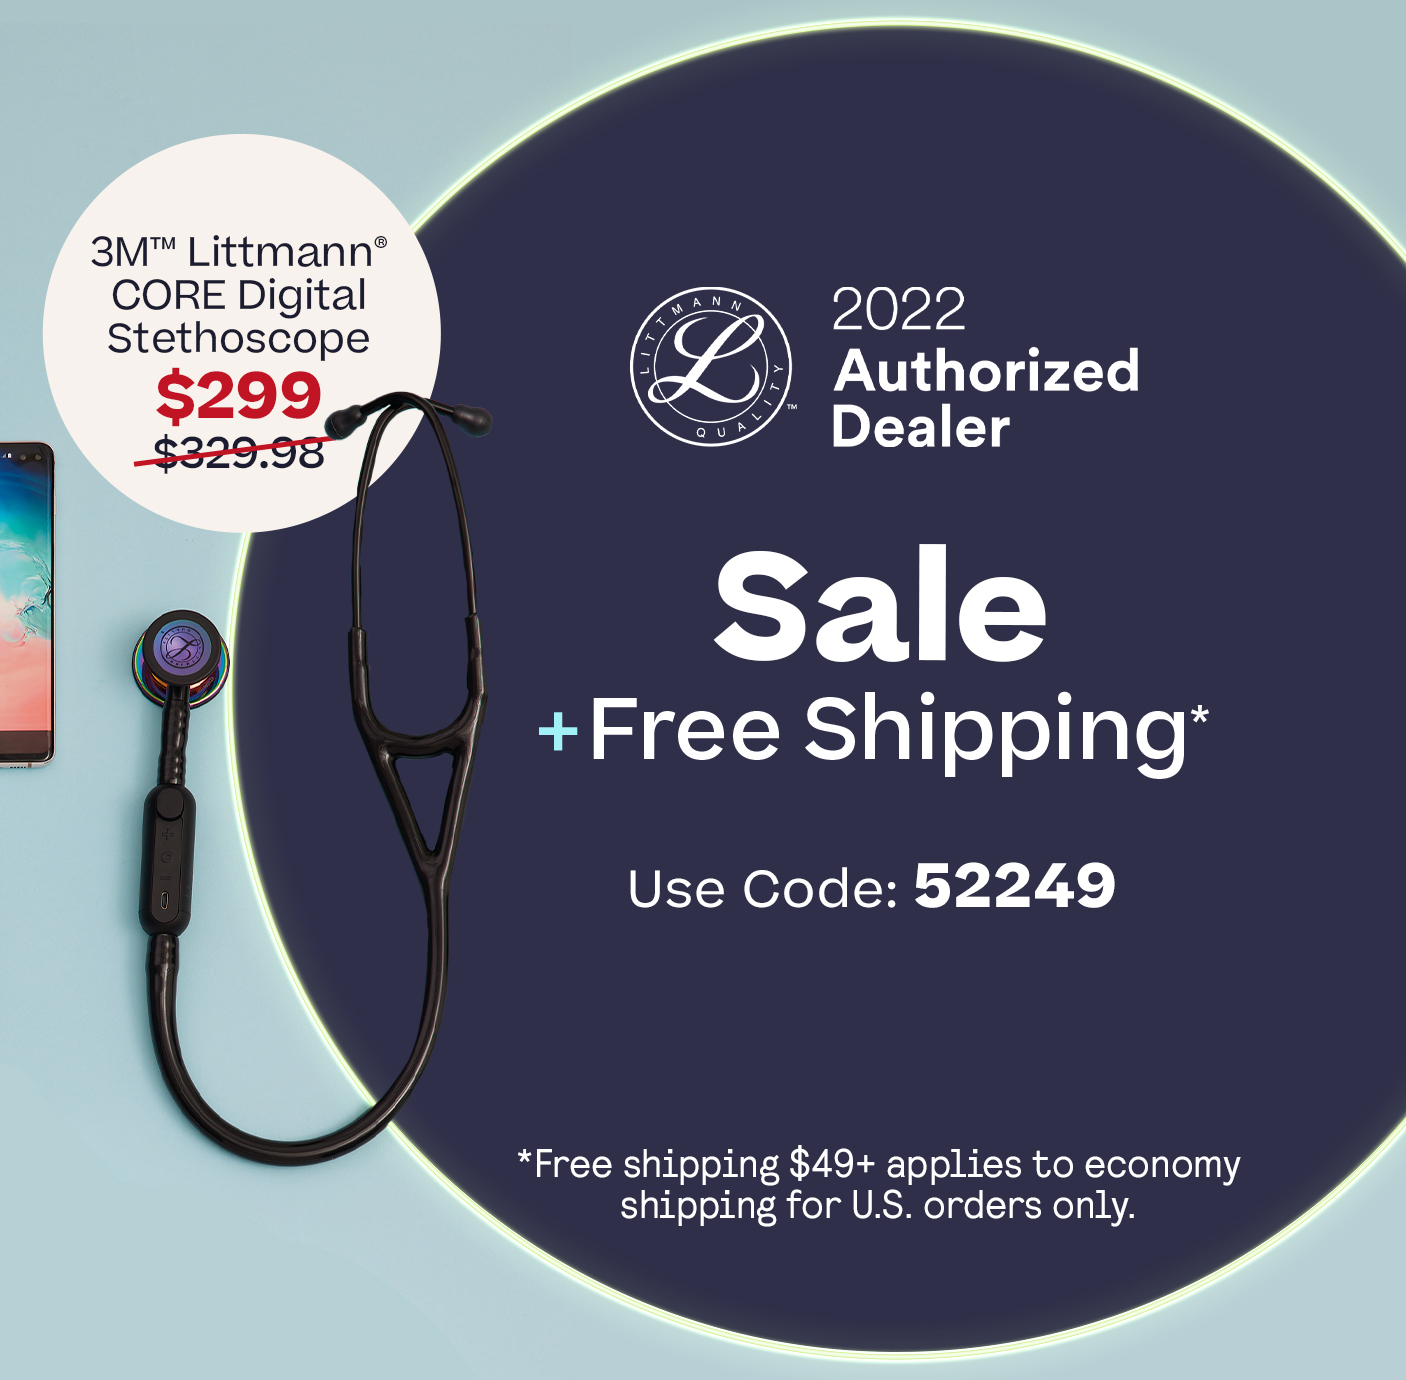 Littmann Sale and plus Free U.S. Shipping $49 Code: 52249 $299.00 CORE Digital Stethoscope